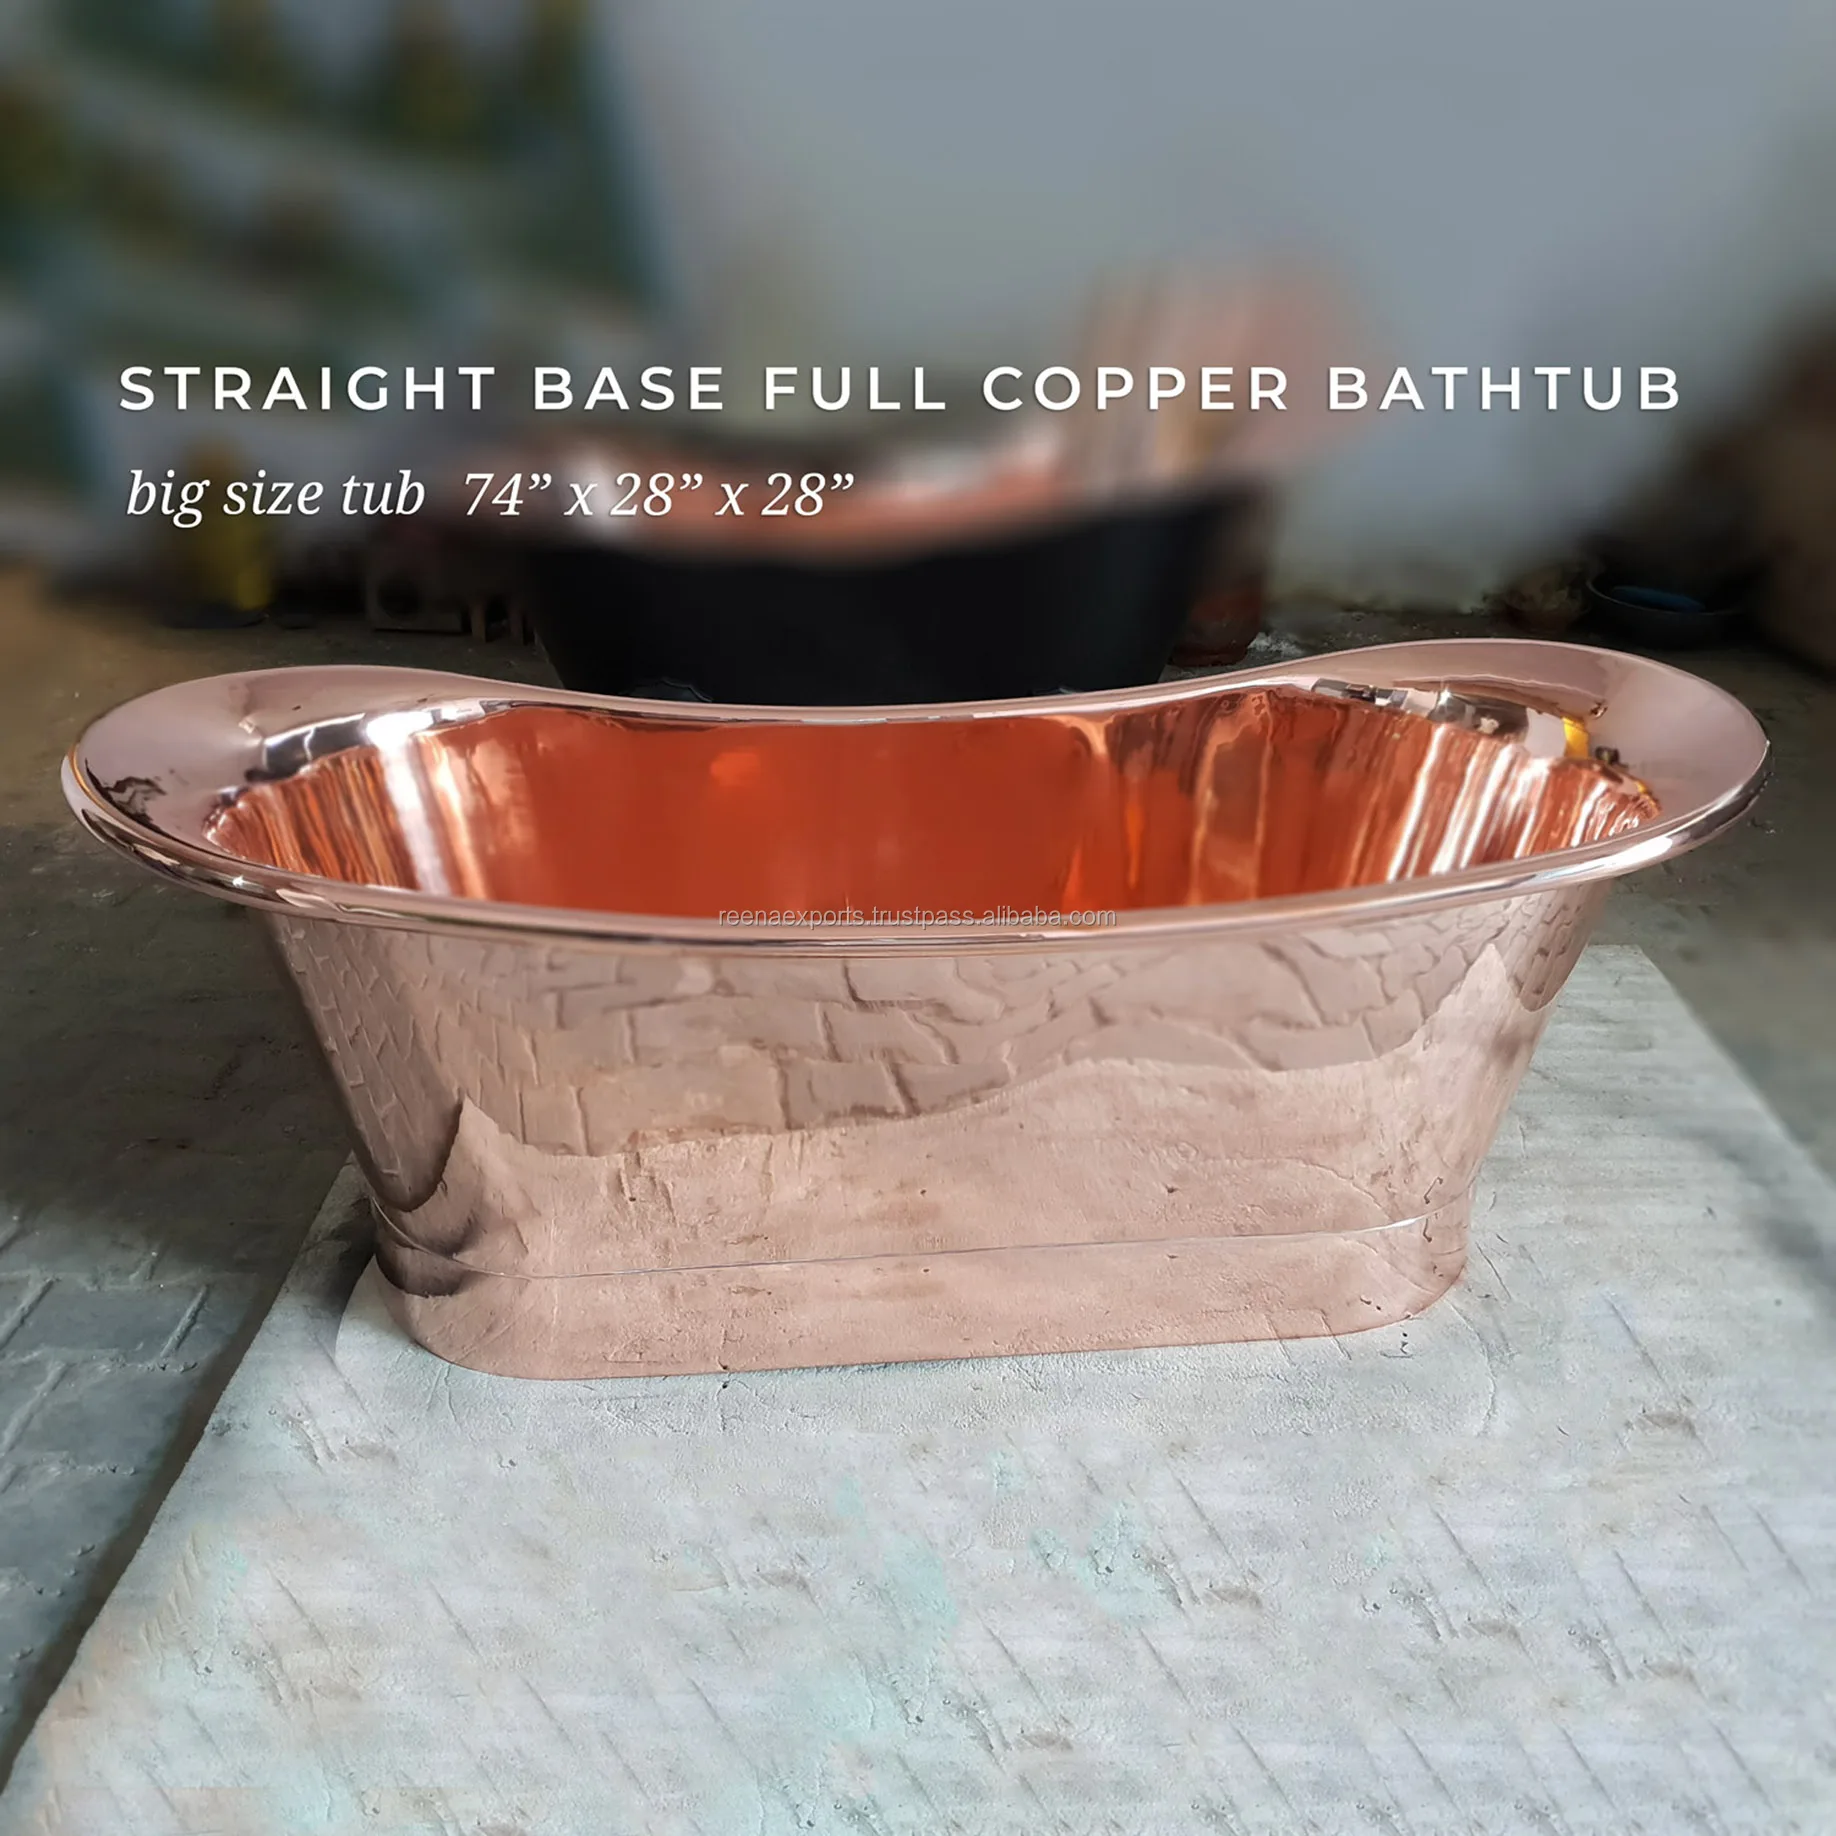 Real Manufacturer Of Copper Bathtub - Buy Copper Bathtubs ...